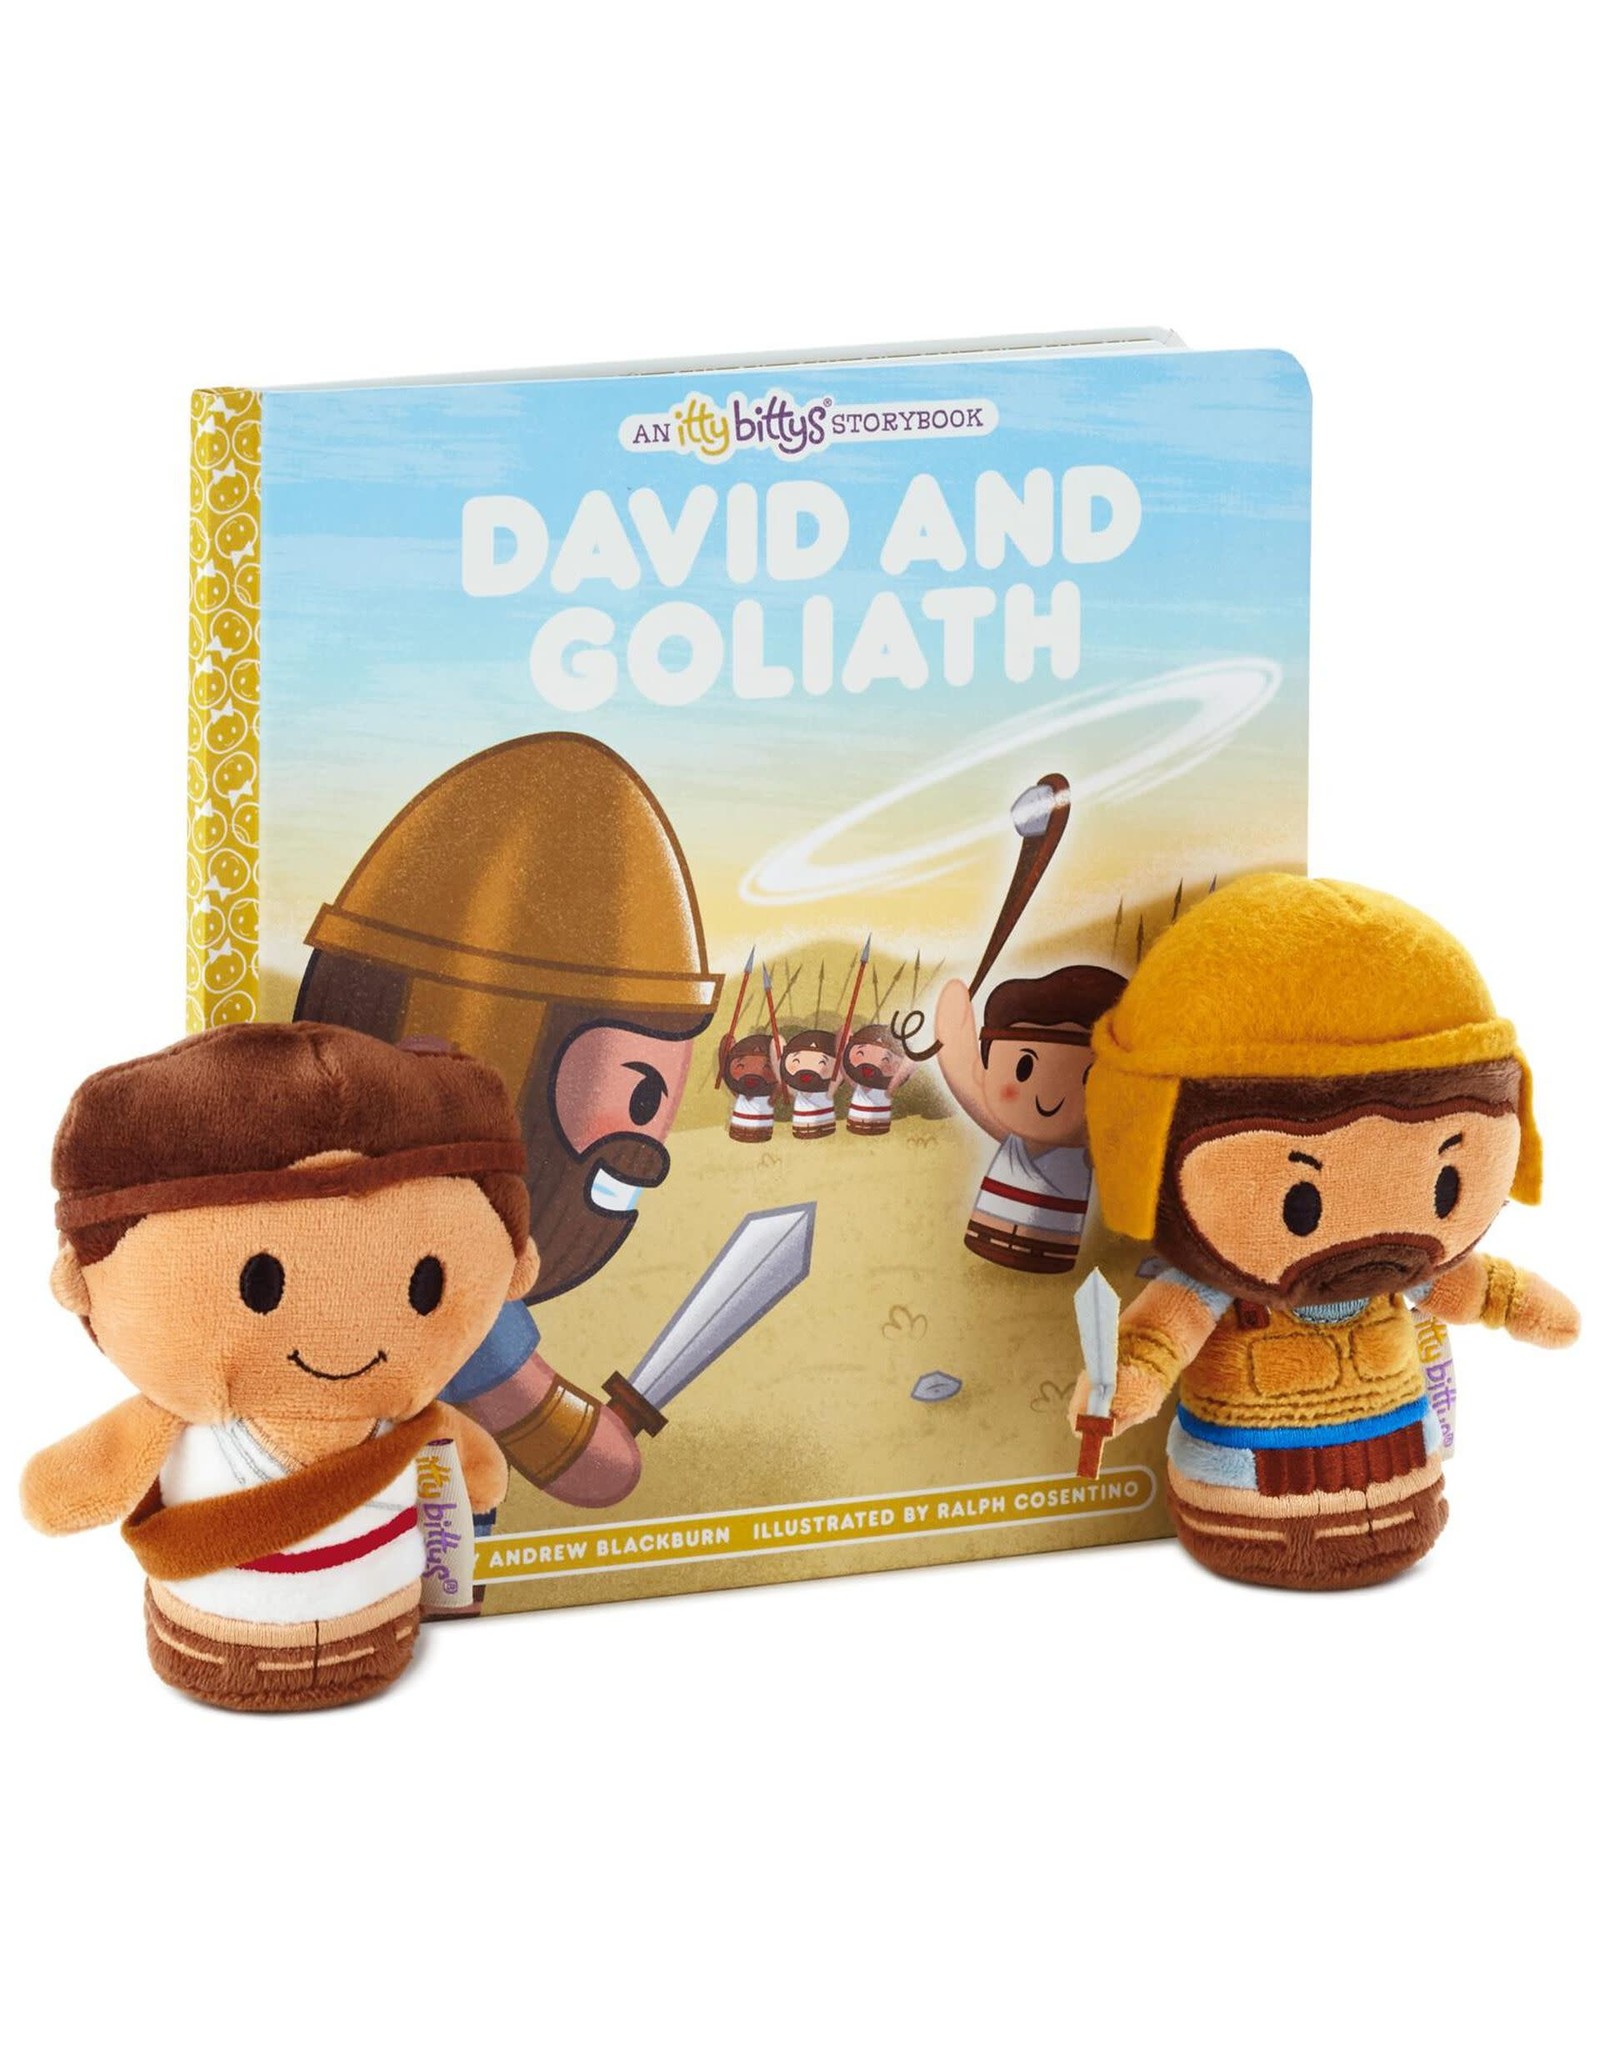 Hallmark itty bittys® David and Goliath Plush and Storybook Set